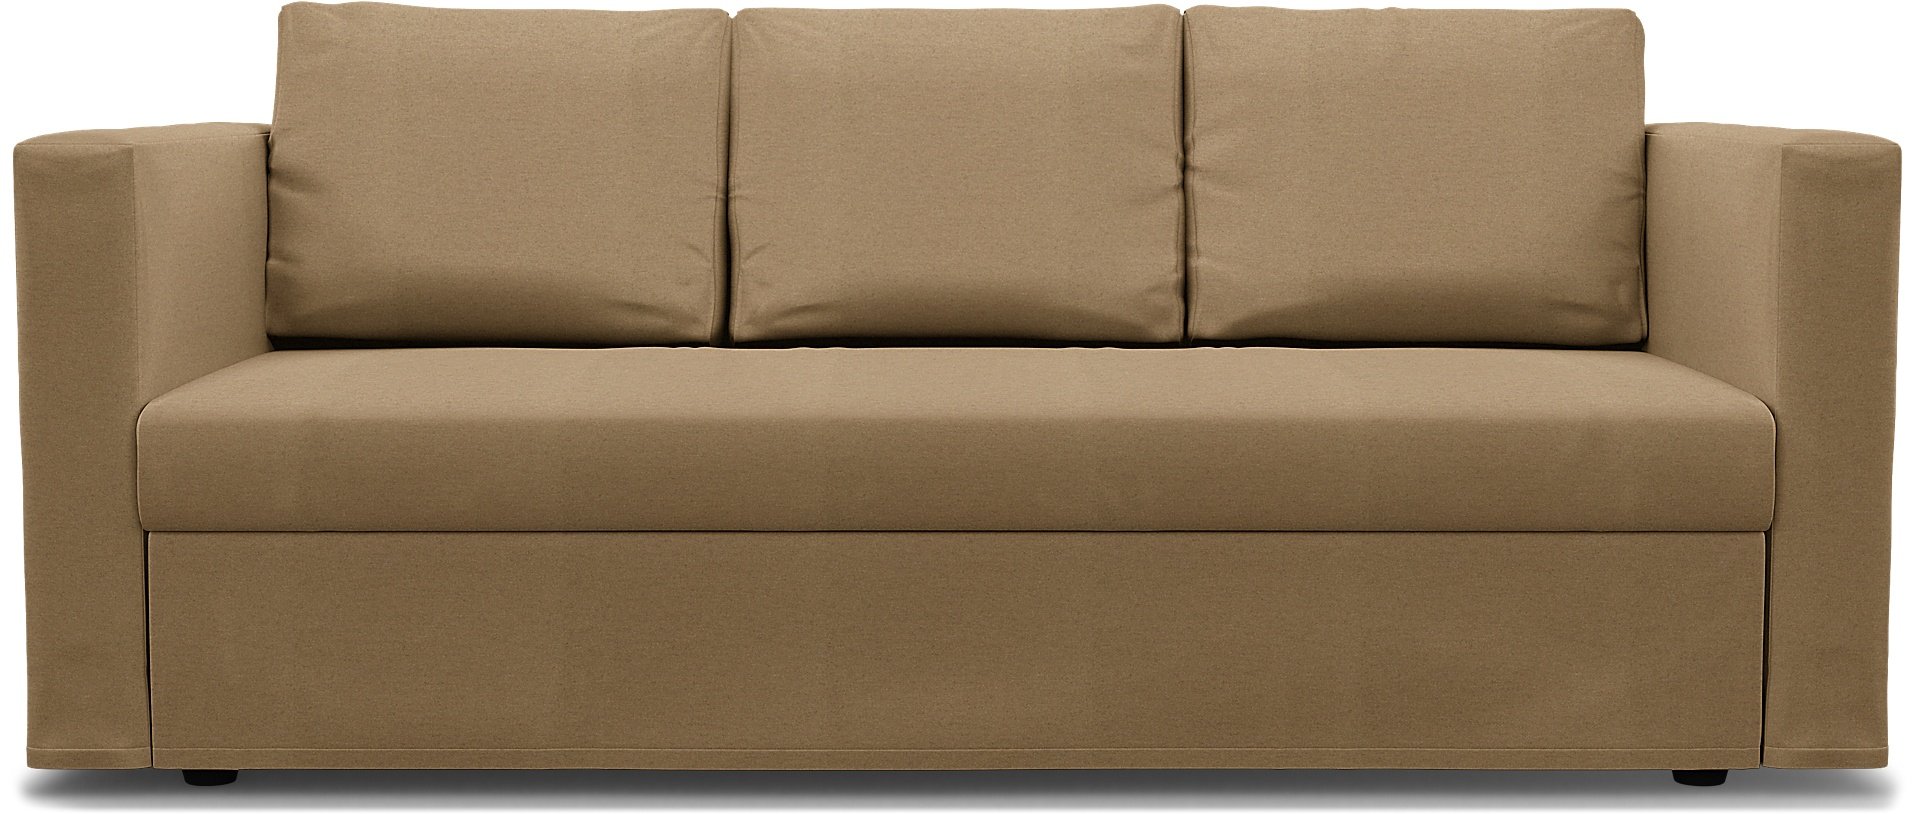 IKEA - Friheten 3 Seater Sofa Bed Cover, Sand, Wool - Bemz